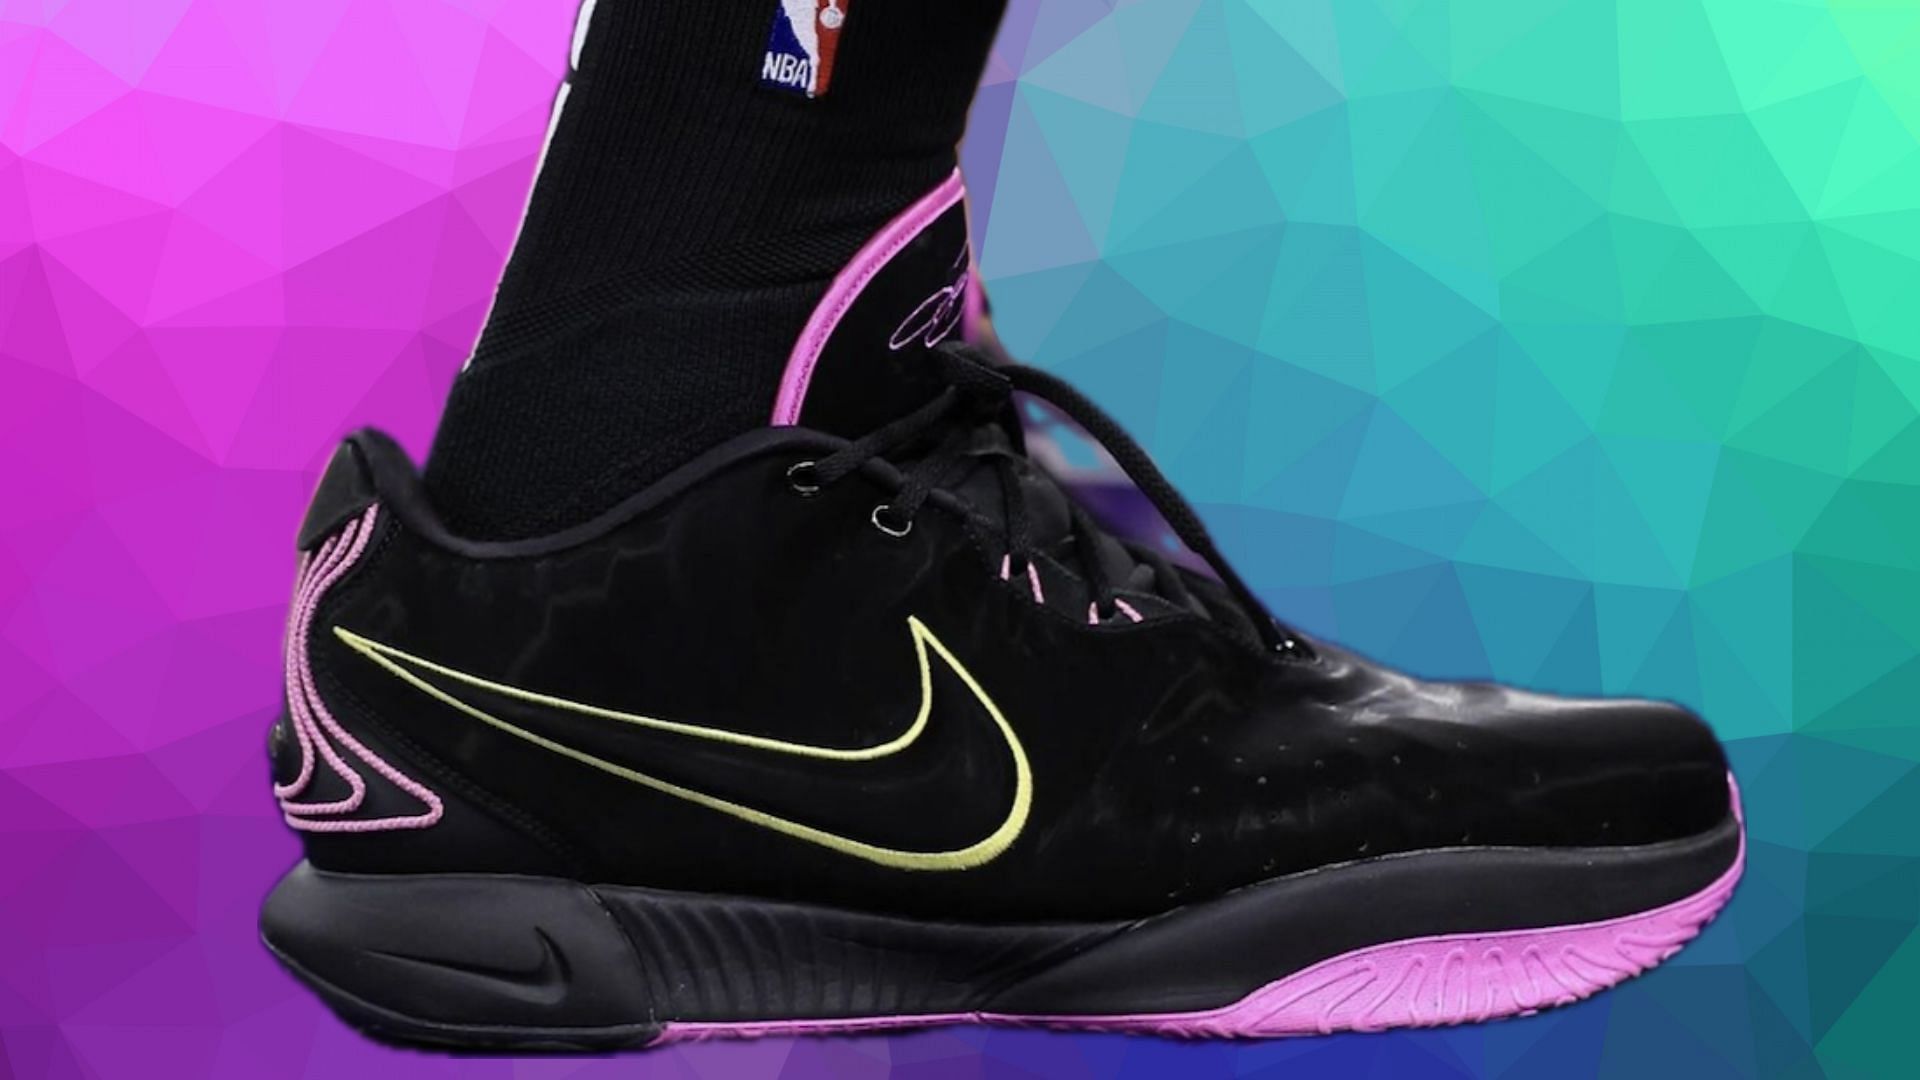 Nike LeBron 21 Black/Pink shoes (Image via Instagram/@lakersscene)